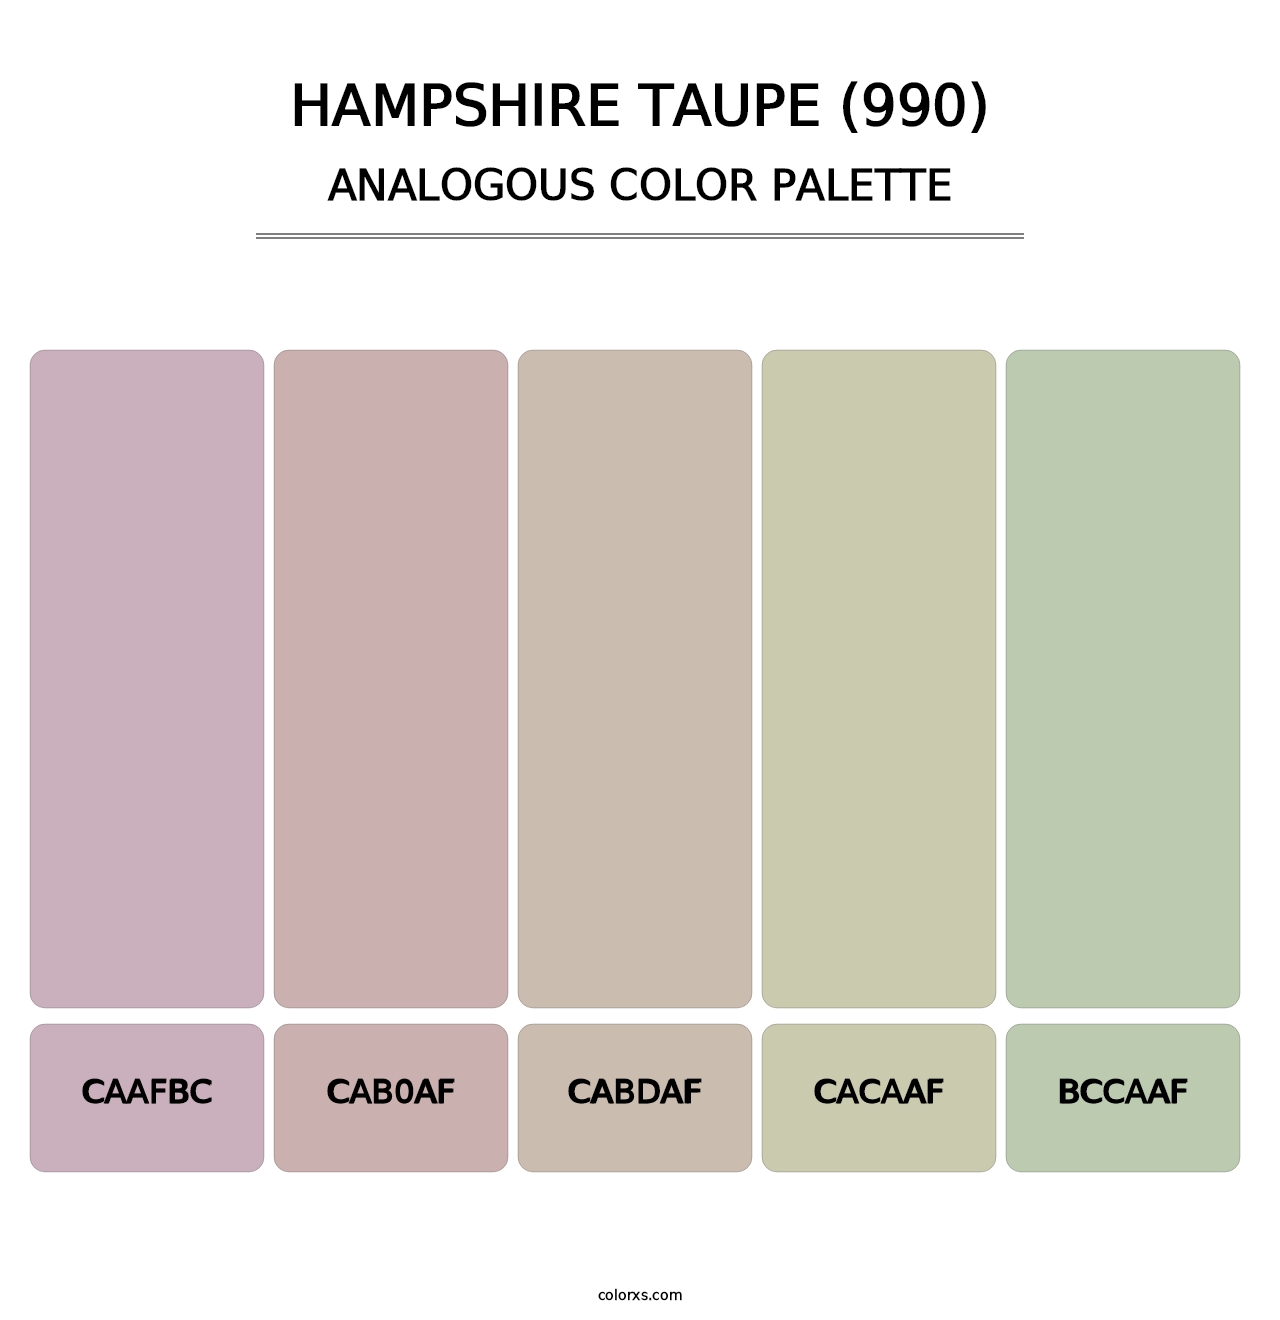 Hampshire Taupe (990) - Analogous Color Palette